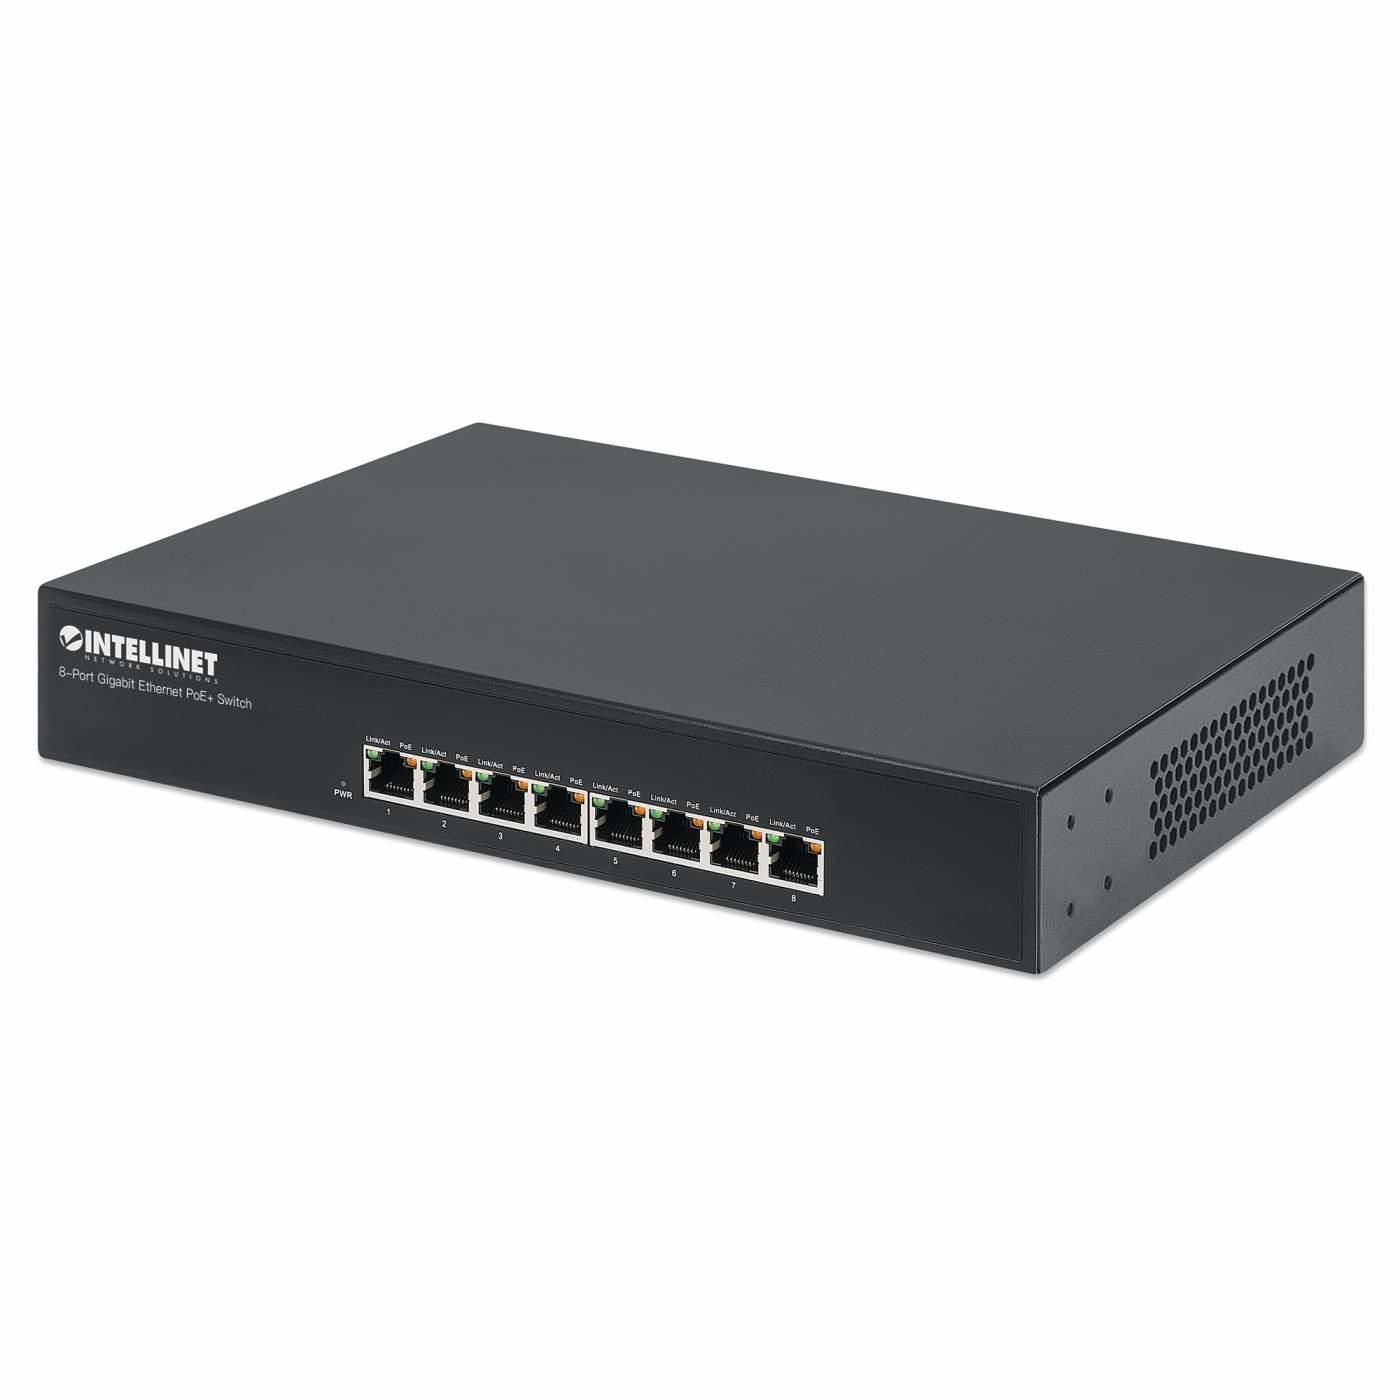 Intellinet 560641 W128261925 8-Port Gigabit Ethernet Poe+ 